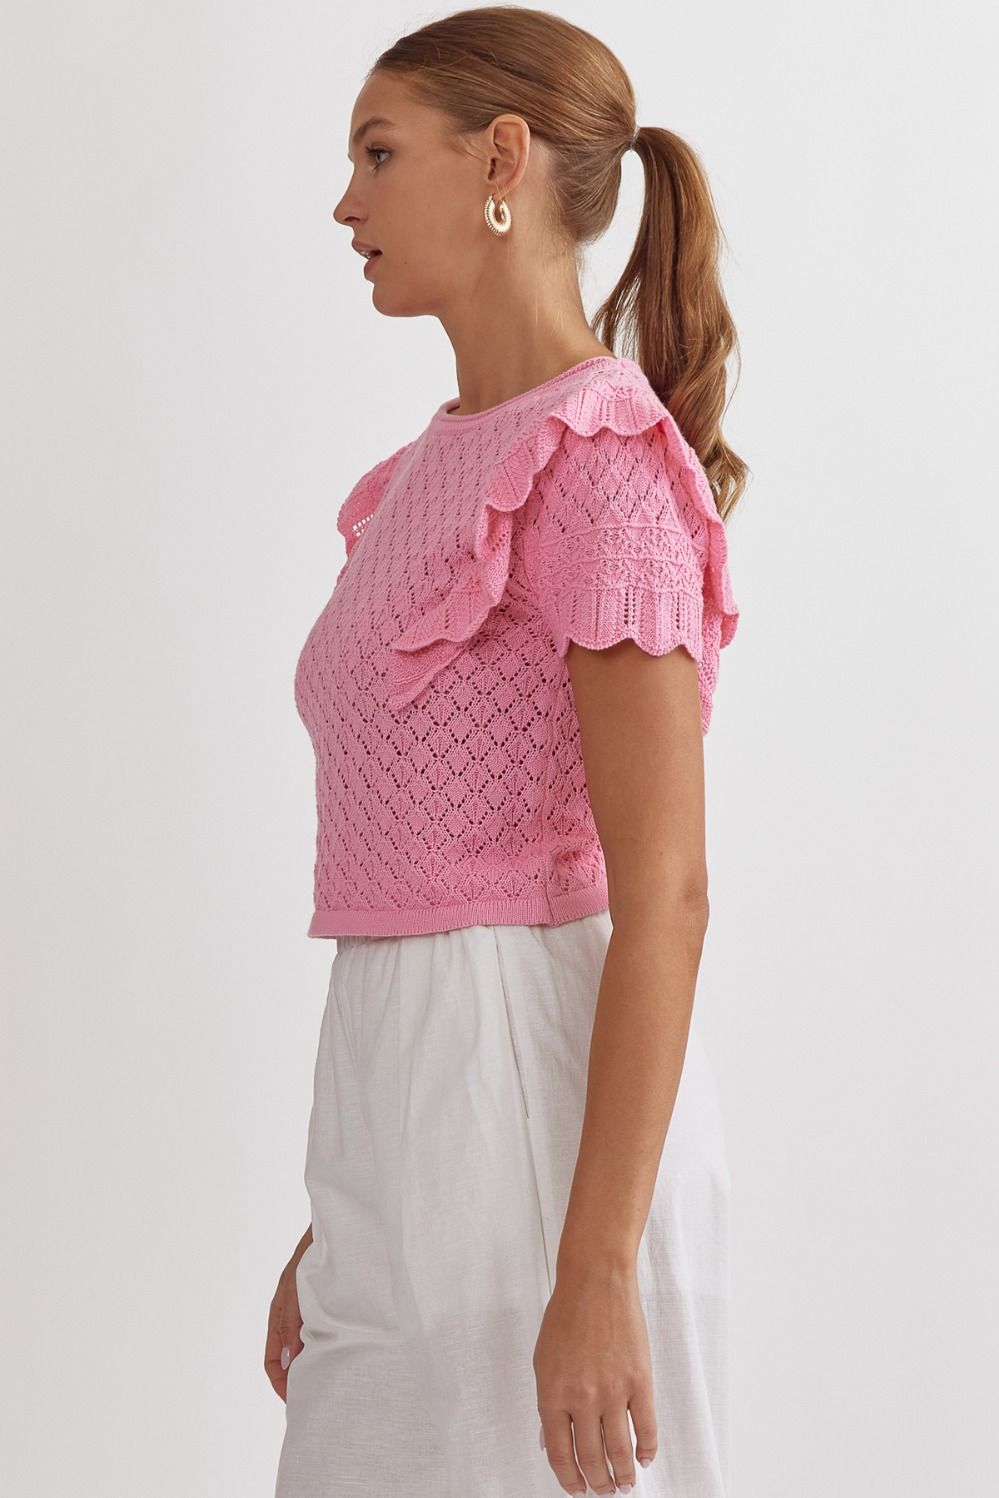 Entro | Pink Crochet Top for Women | Sweetest Stitch Online Shop